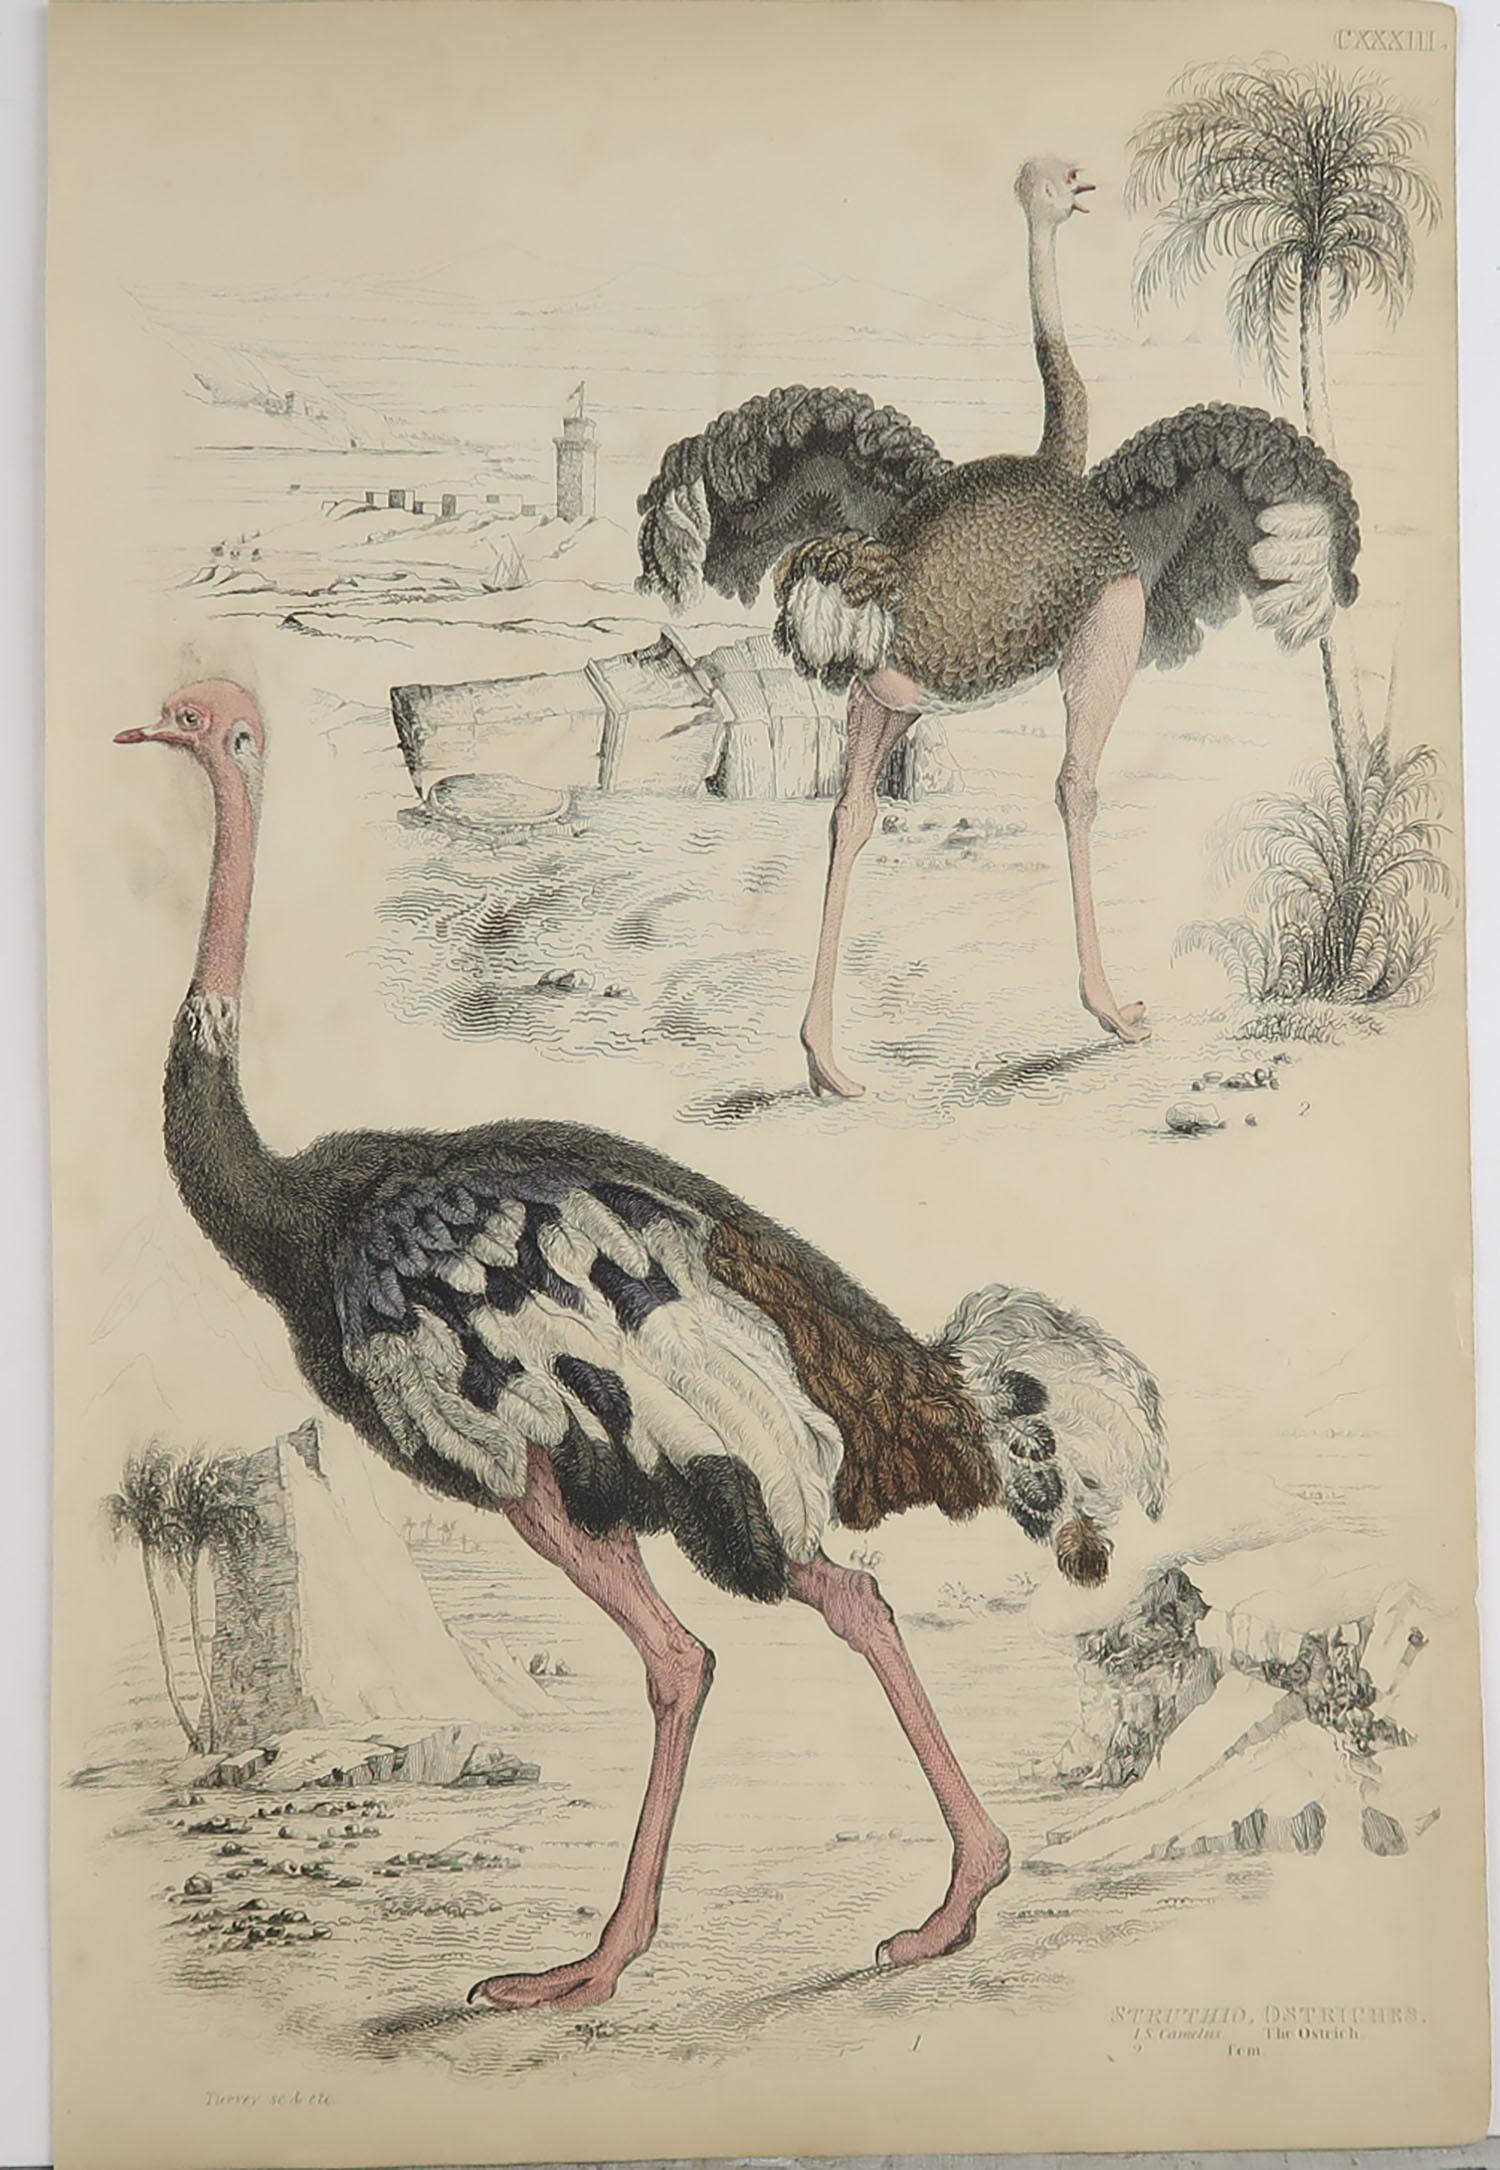 Folk Art Large Original Antique Natural History Print, Ostriches, circa 1835